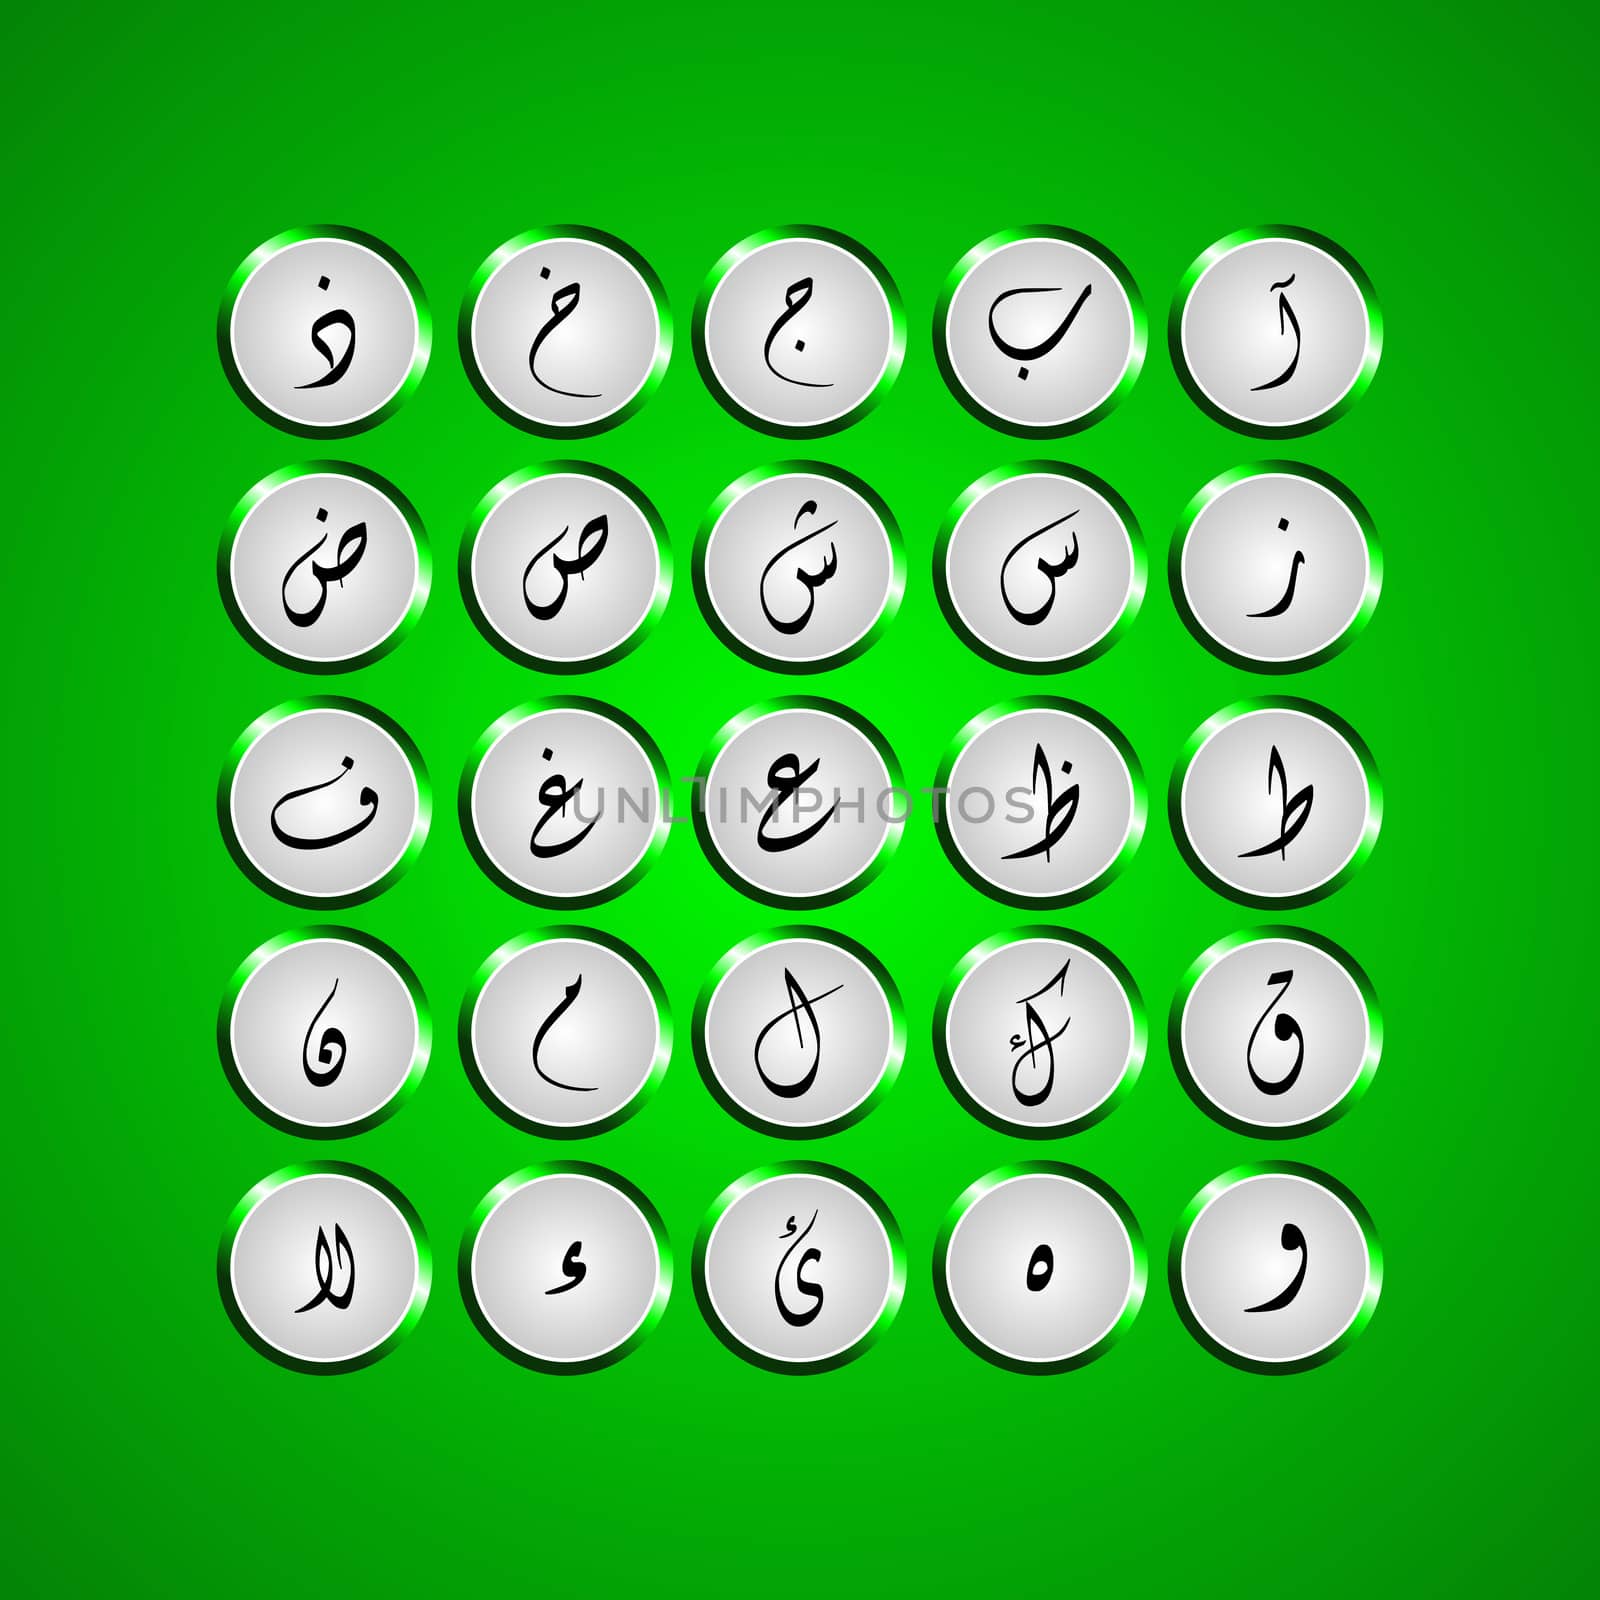 Arabic typography design